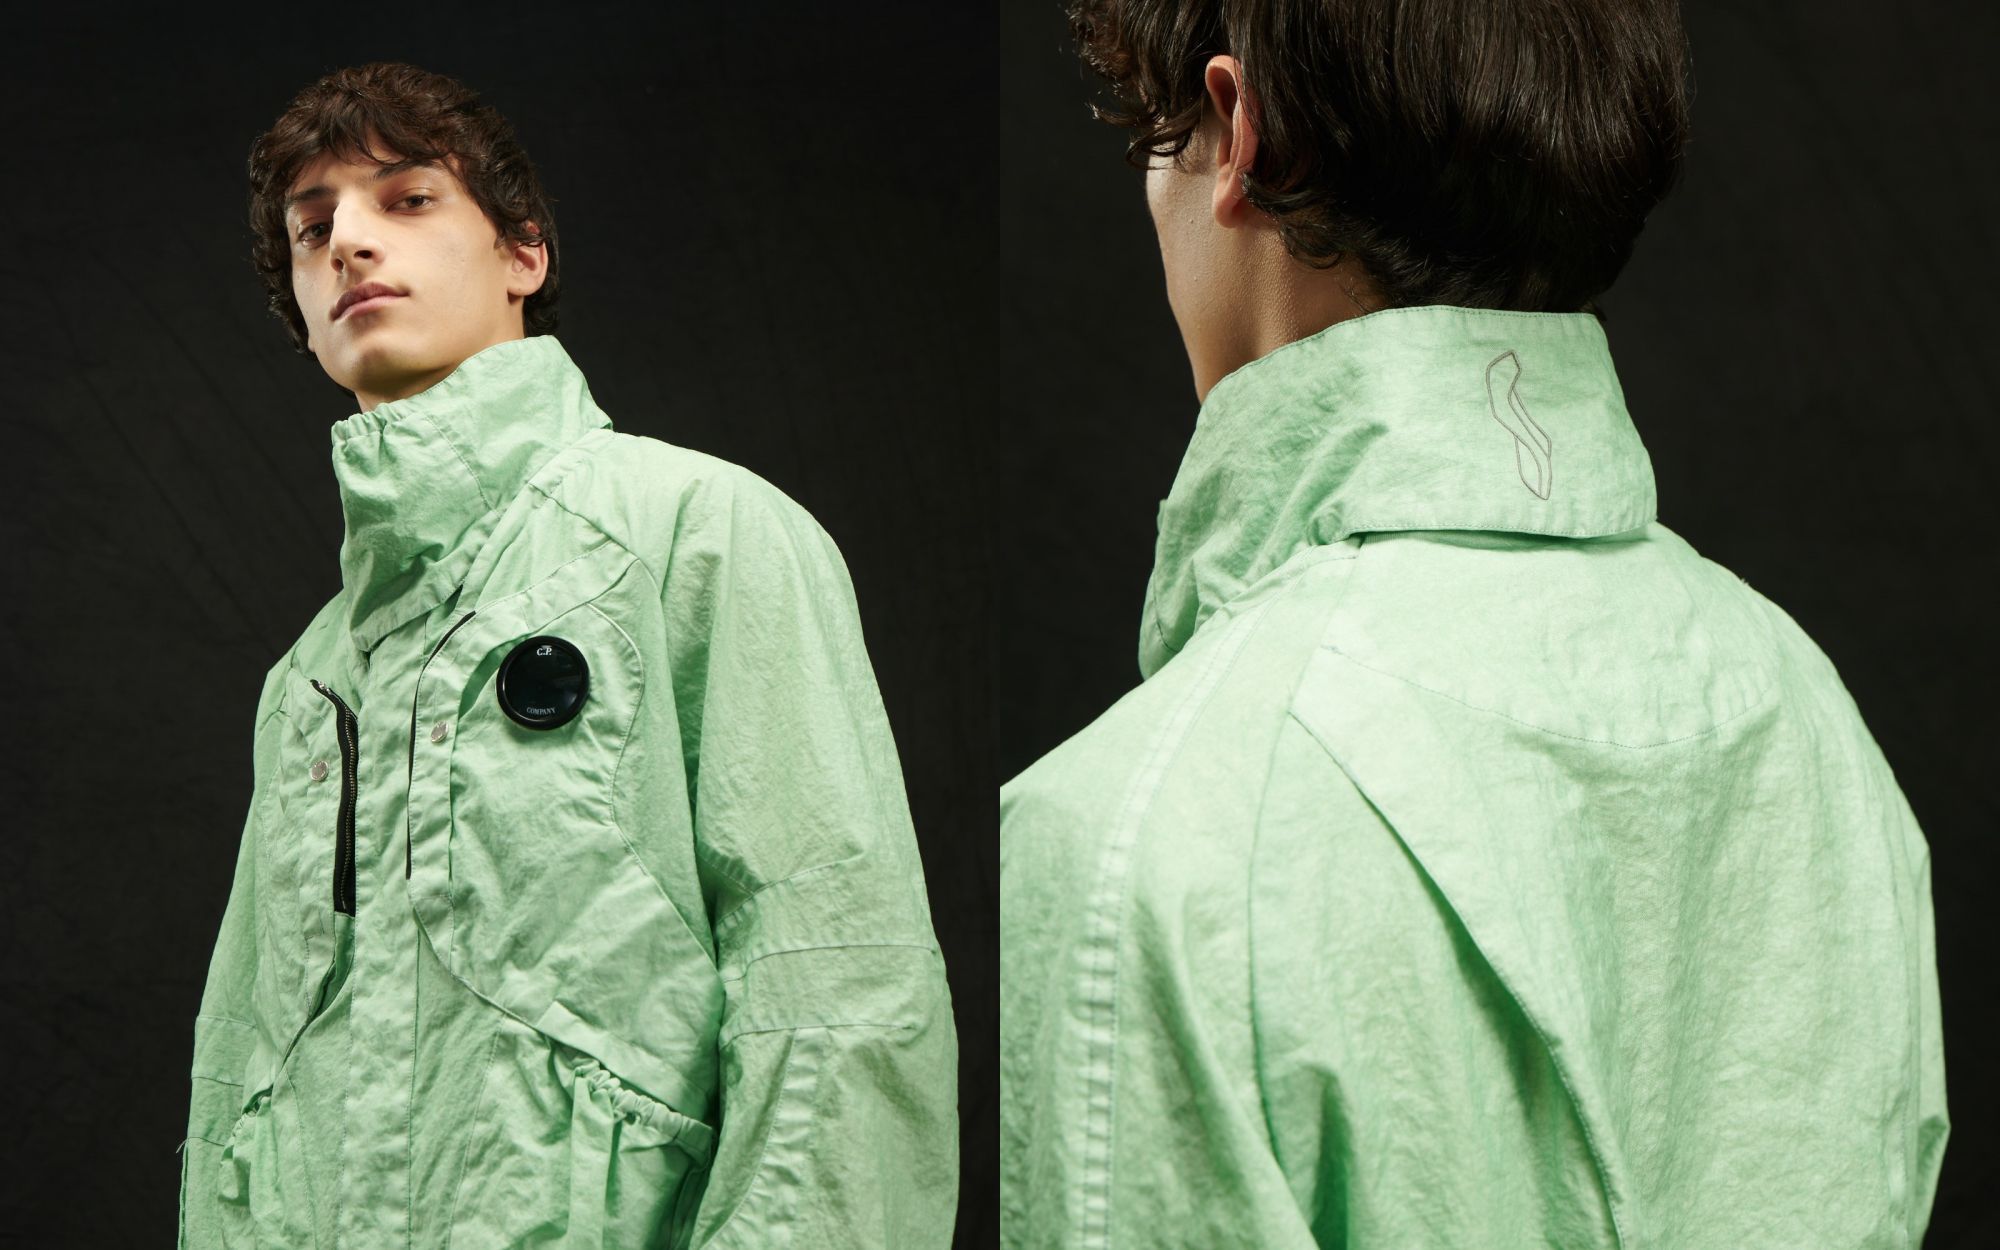 The new modular jacket by C.P. Company x Kiko Kostadinov